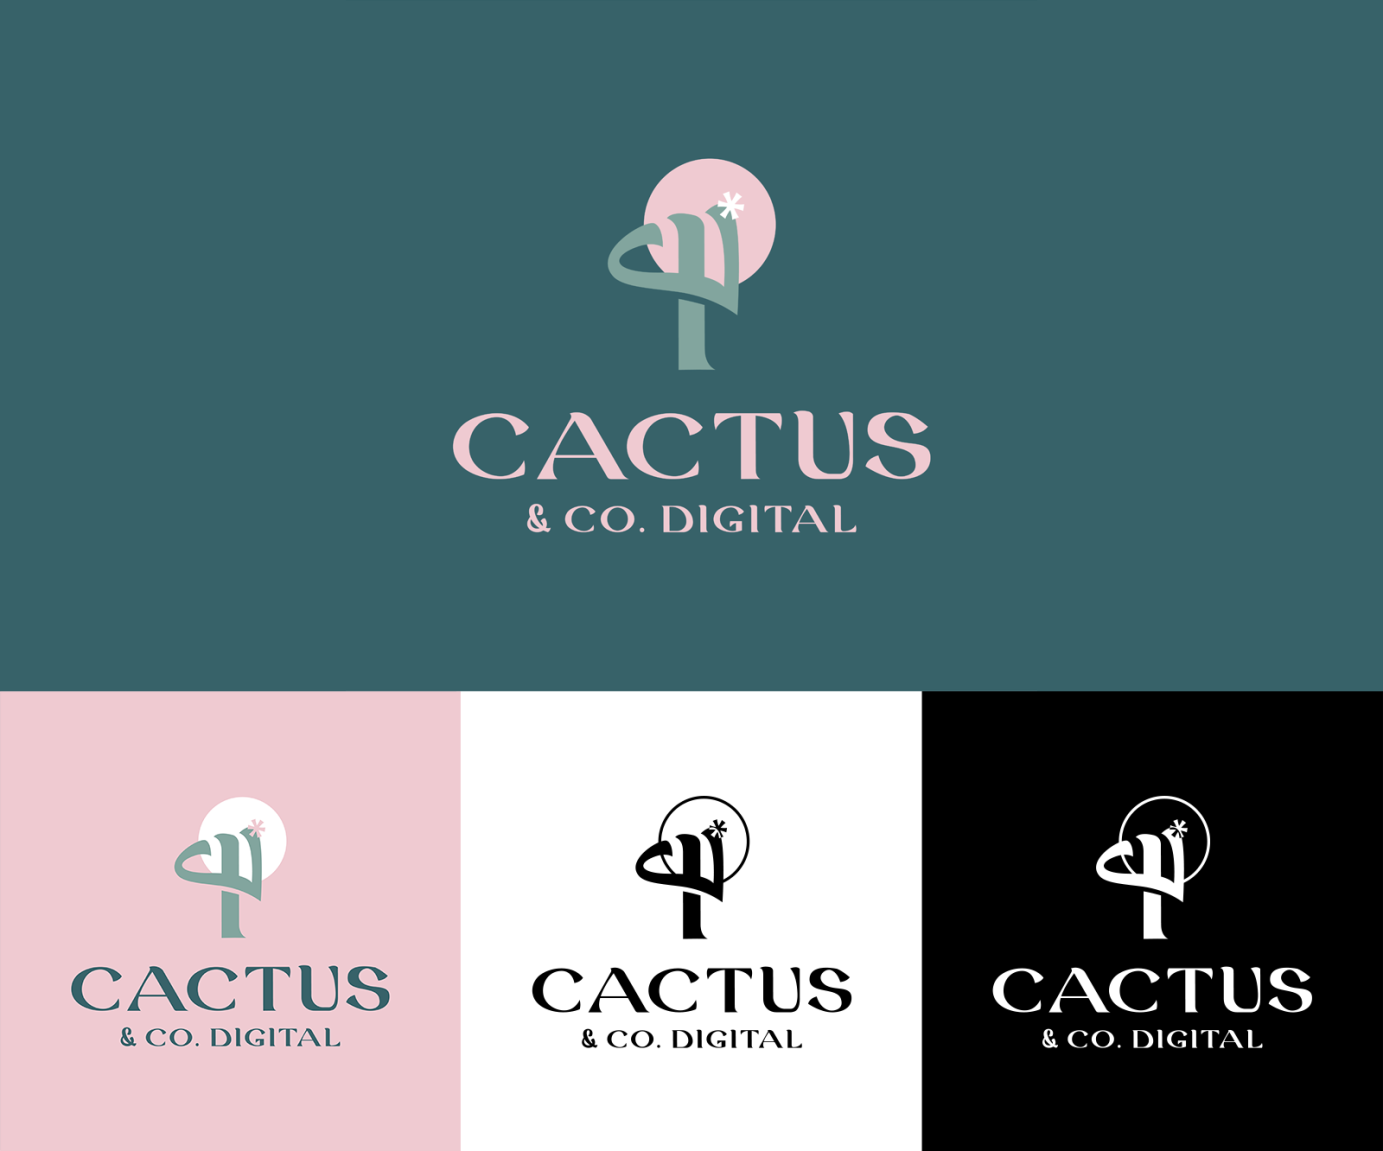 Cactus & Co. Digital Branding